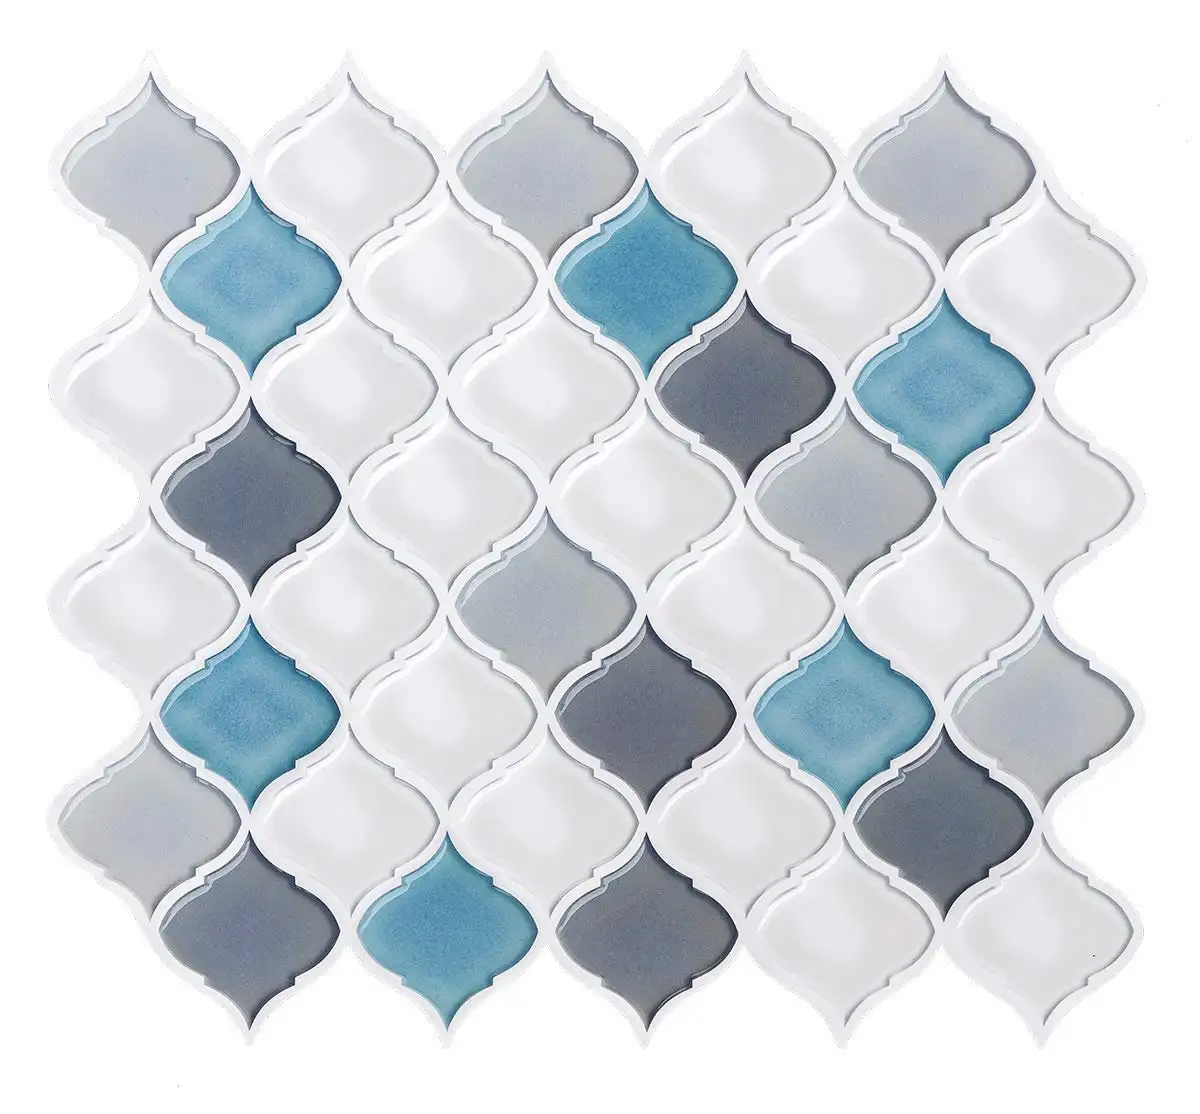 Grey-White Lantern Wall Sticker Premium Anti-Mold Self Adhesive Wallpaper Waterproof Peel And Stick 3D Wall Tiles for Kitchen